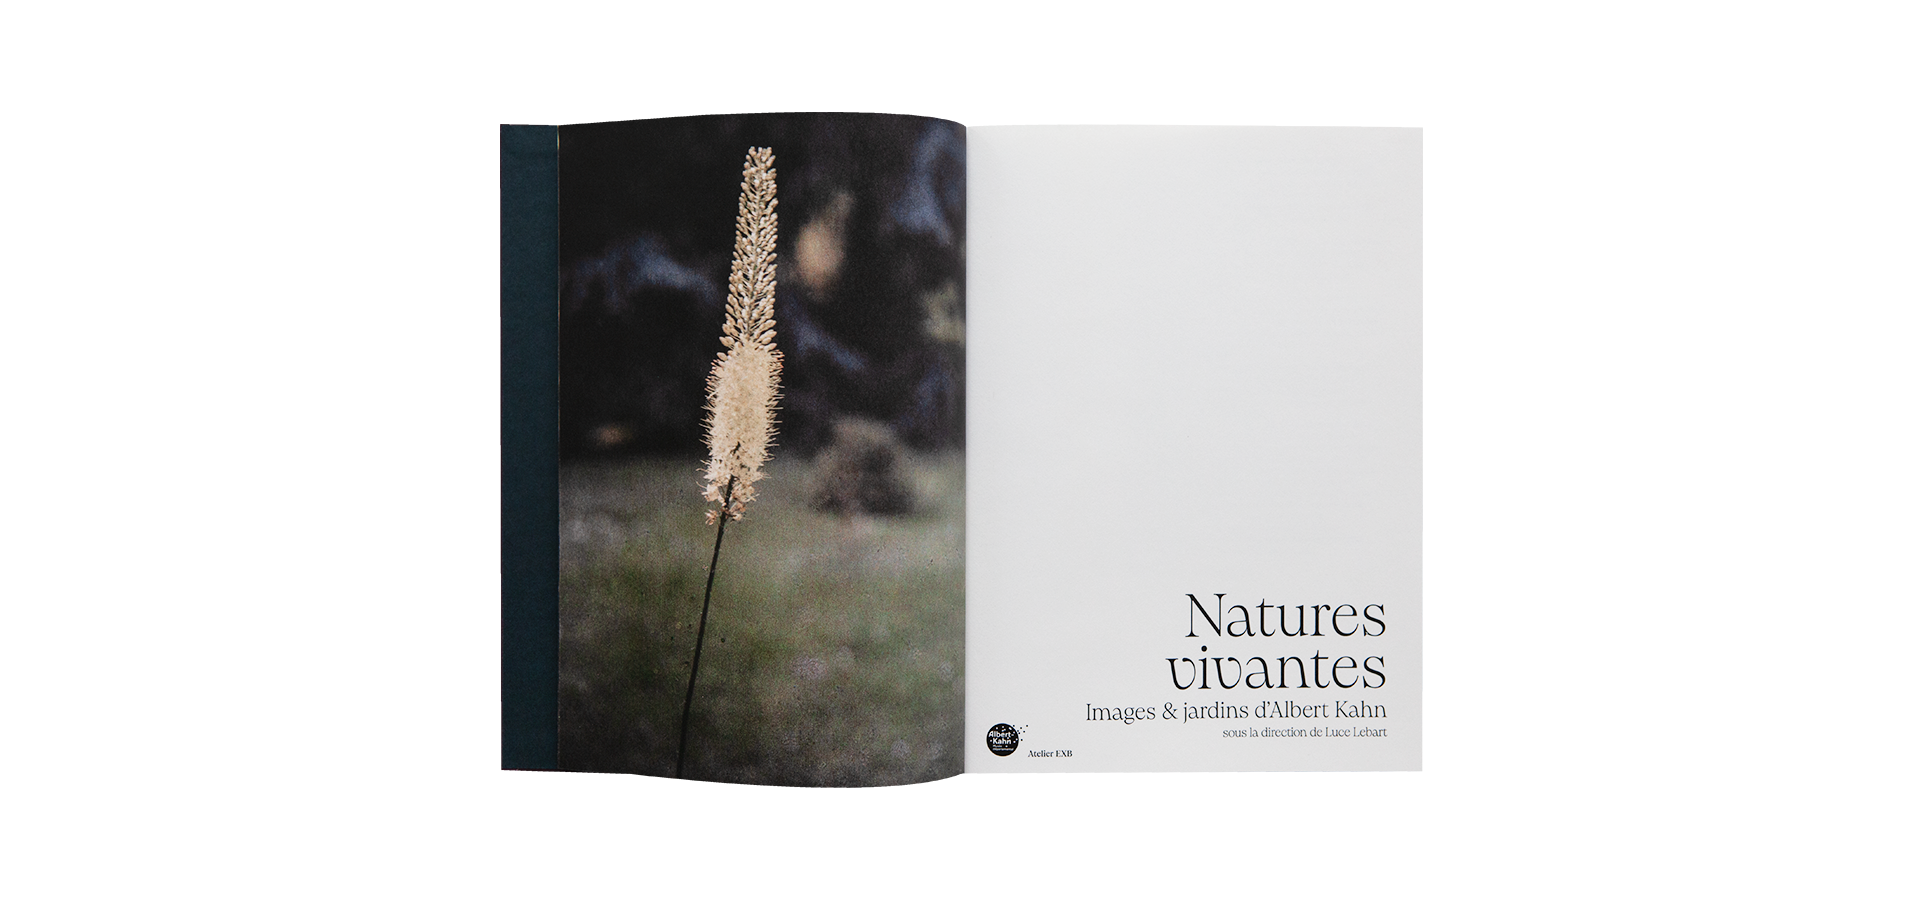 Natures Vivantes, Images & jardins d'Albert Kahn